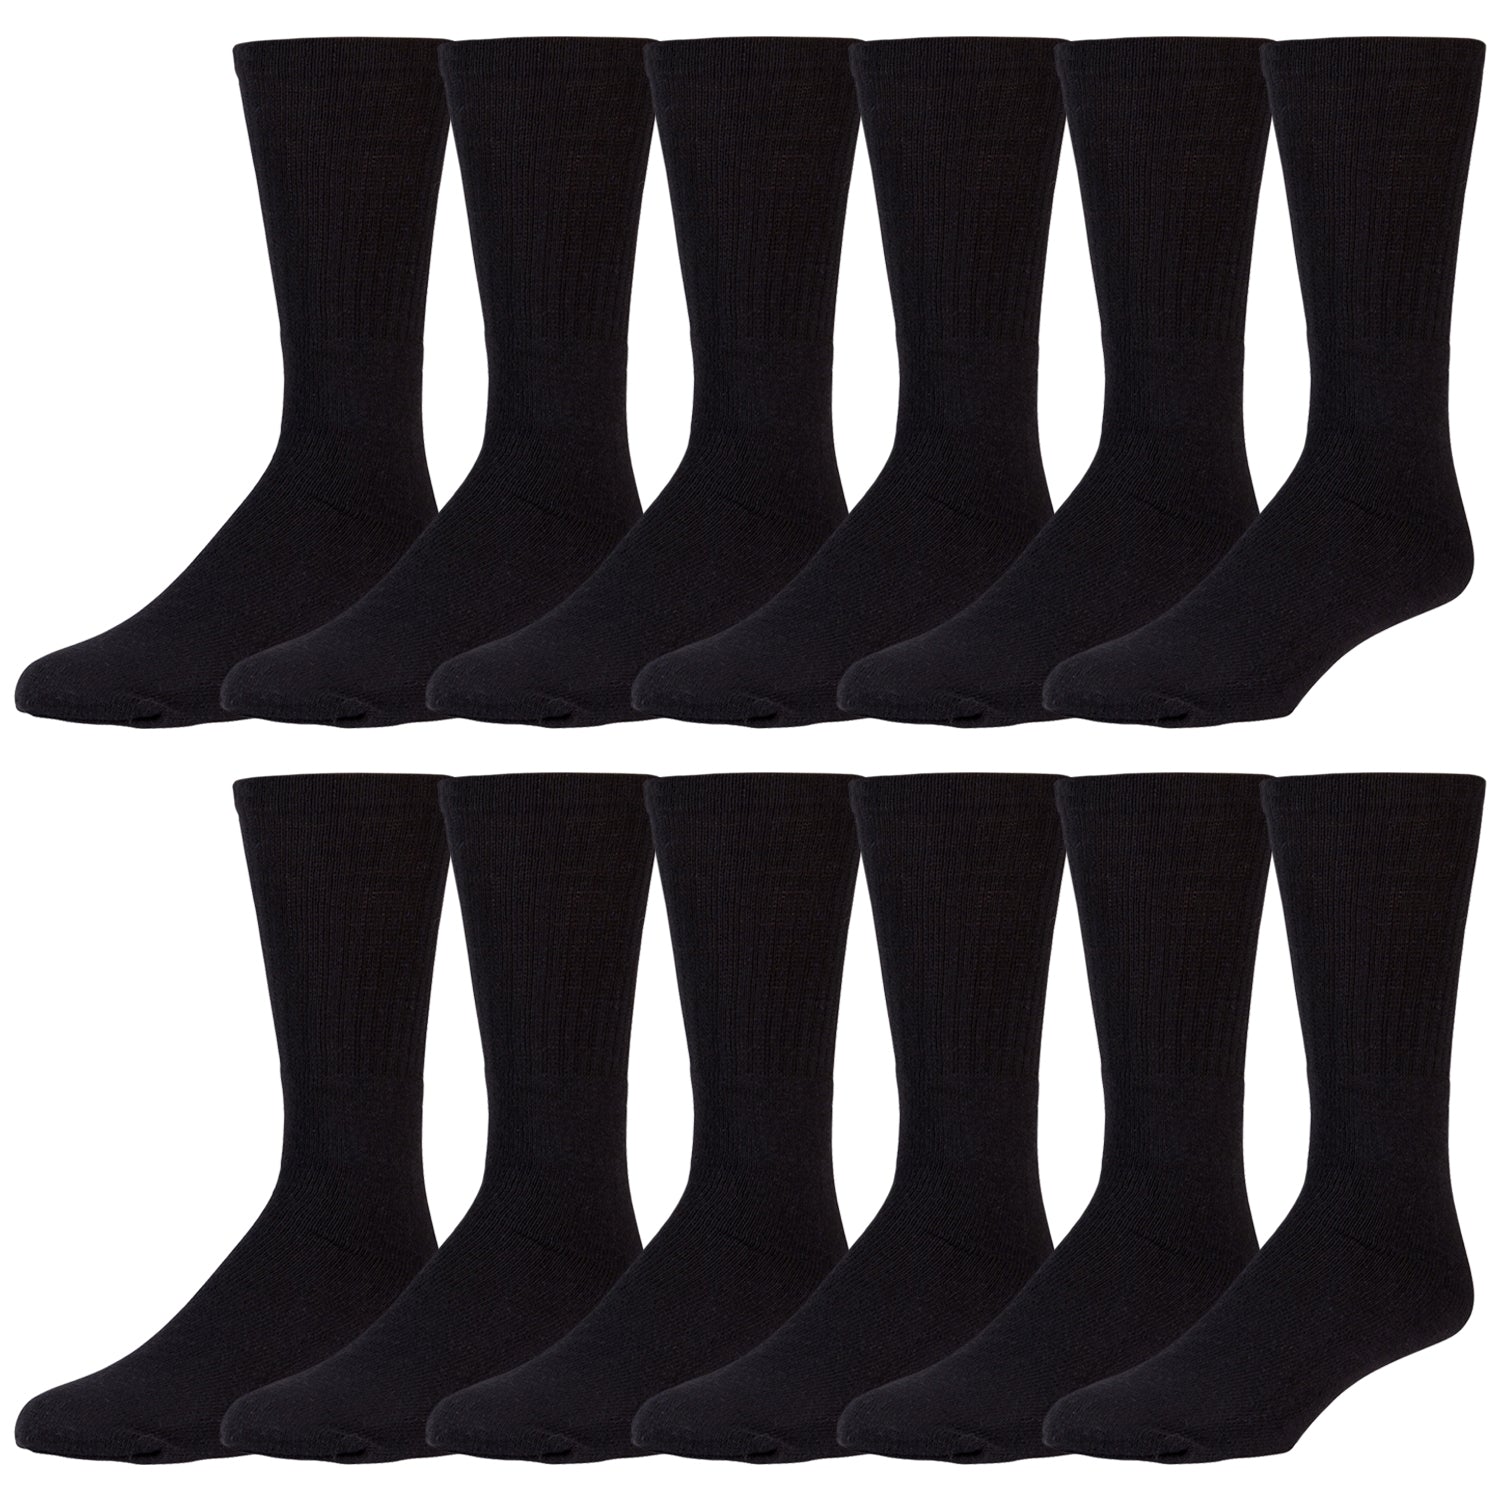 Men's & Women's Referee Style Cotton Sports Socks